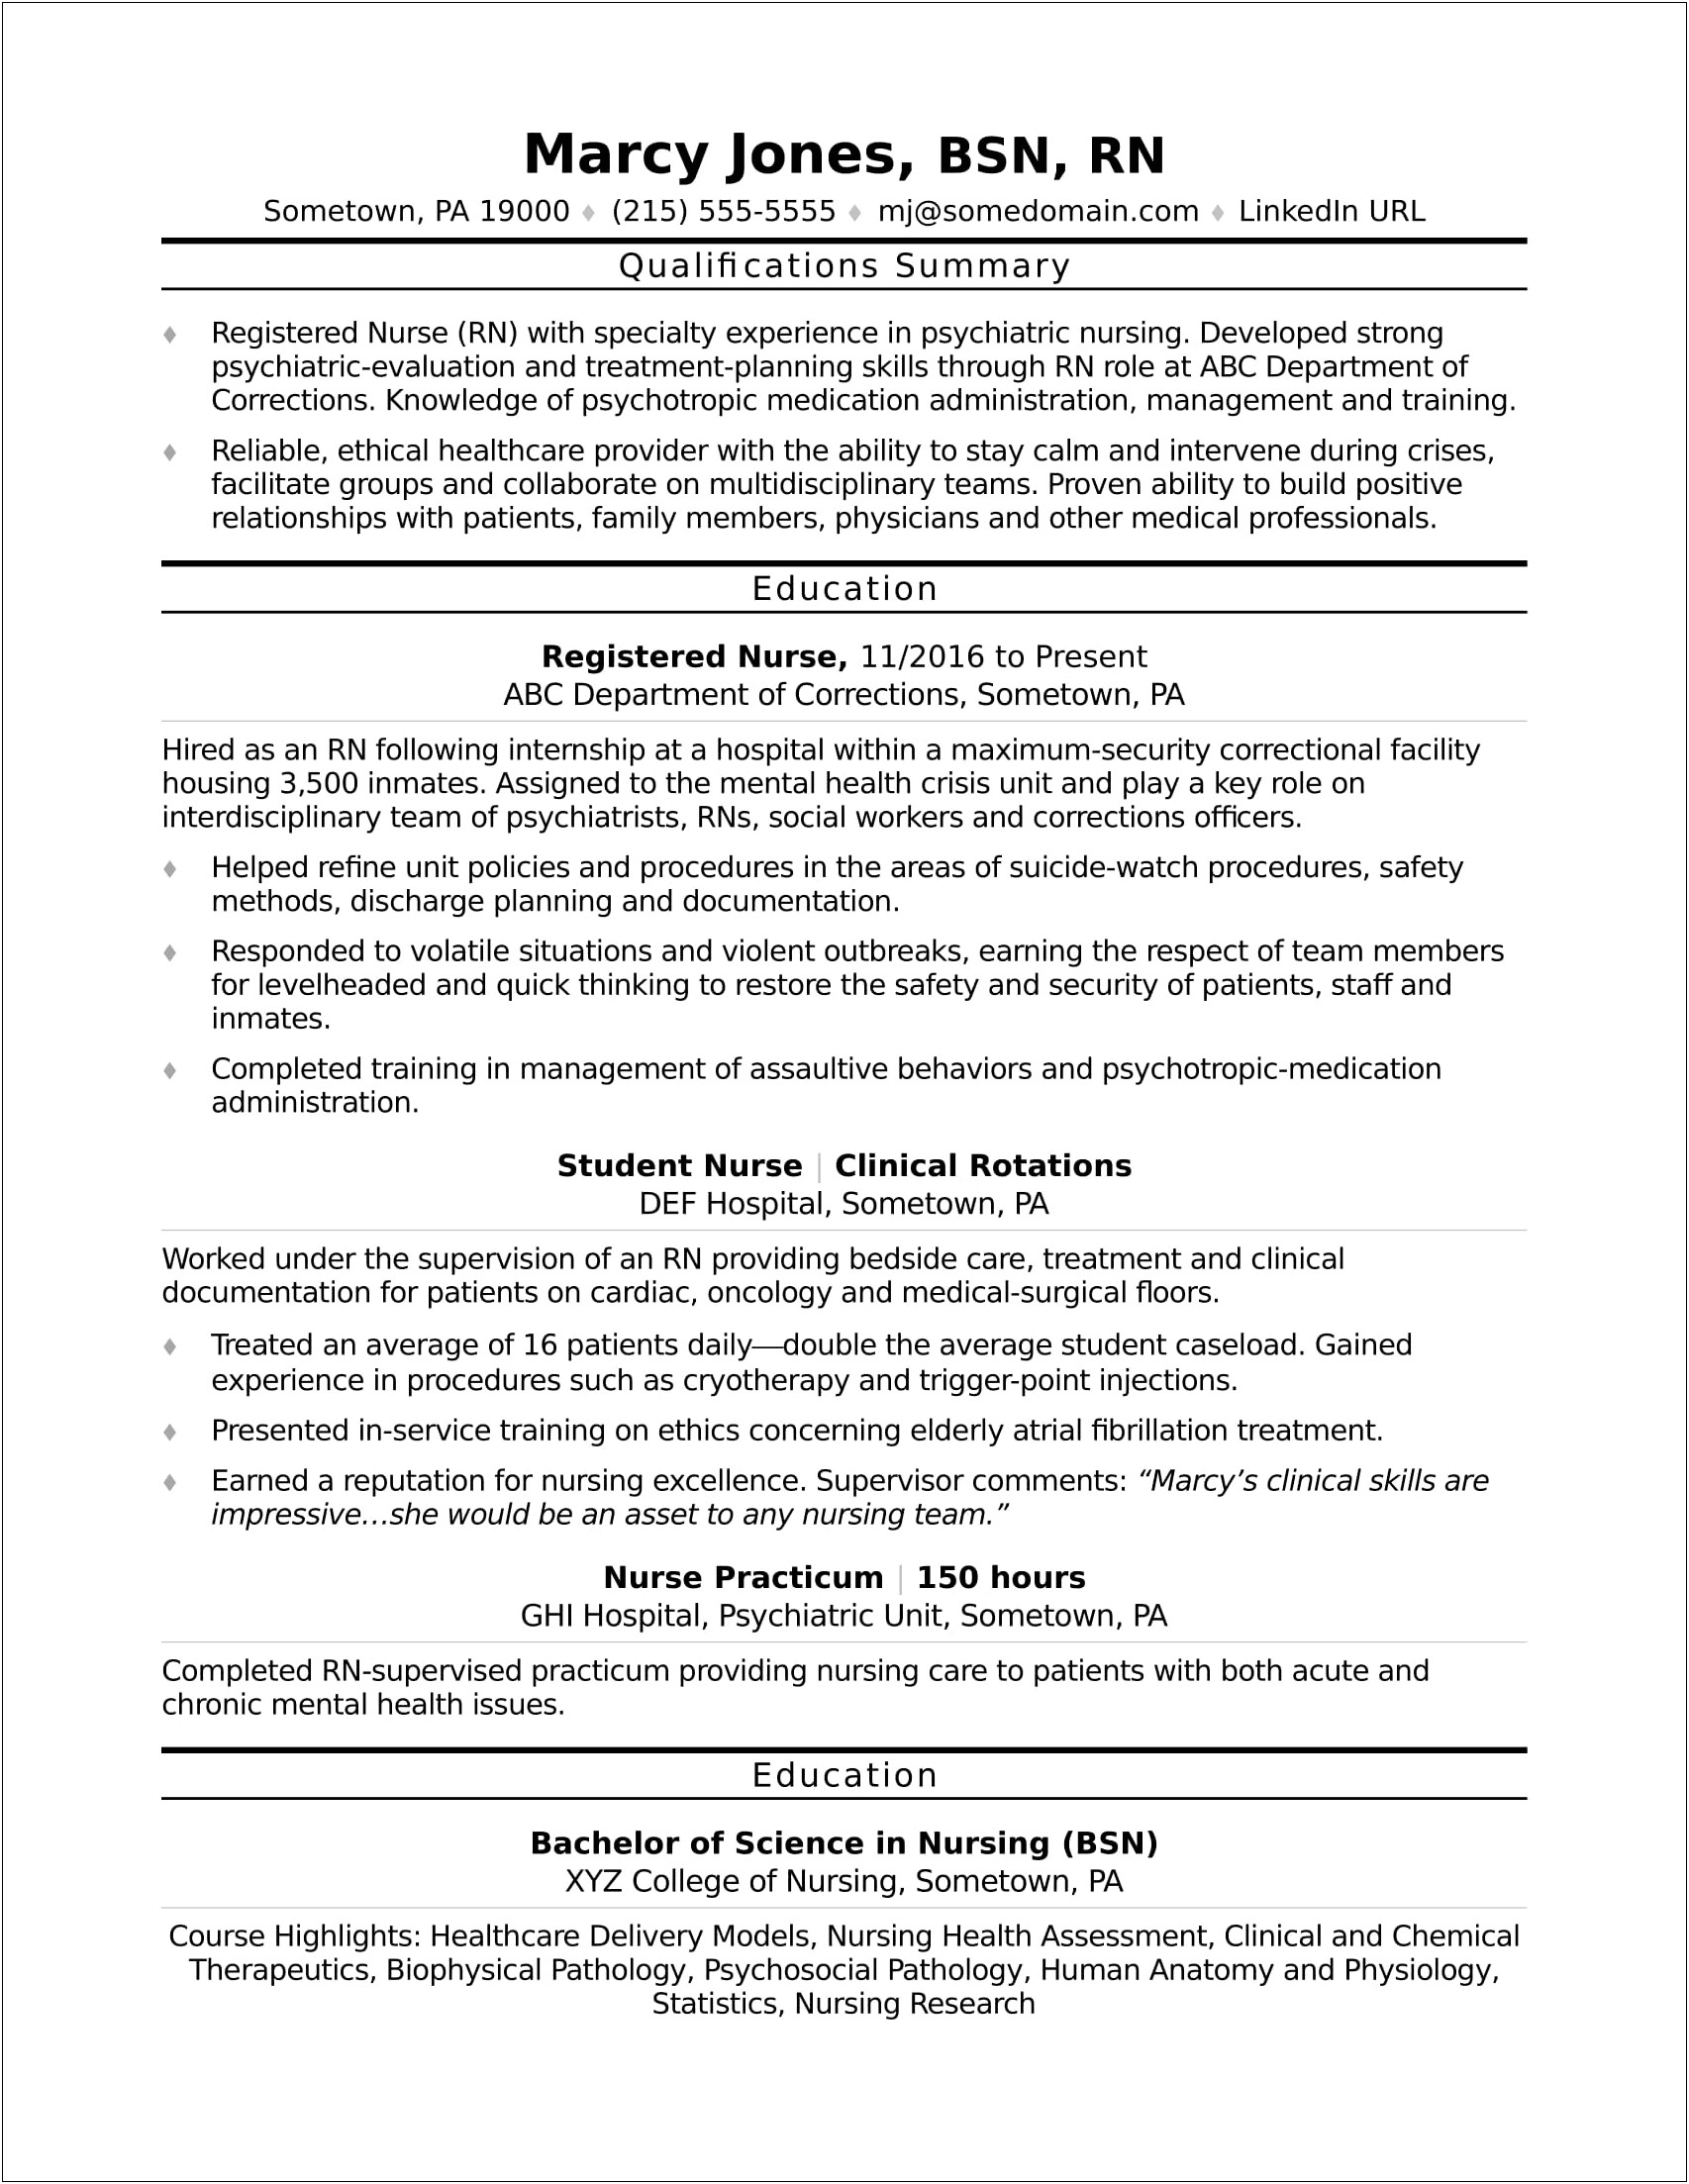 Resume Sample Using Professional Summary For Nursing